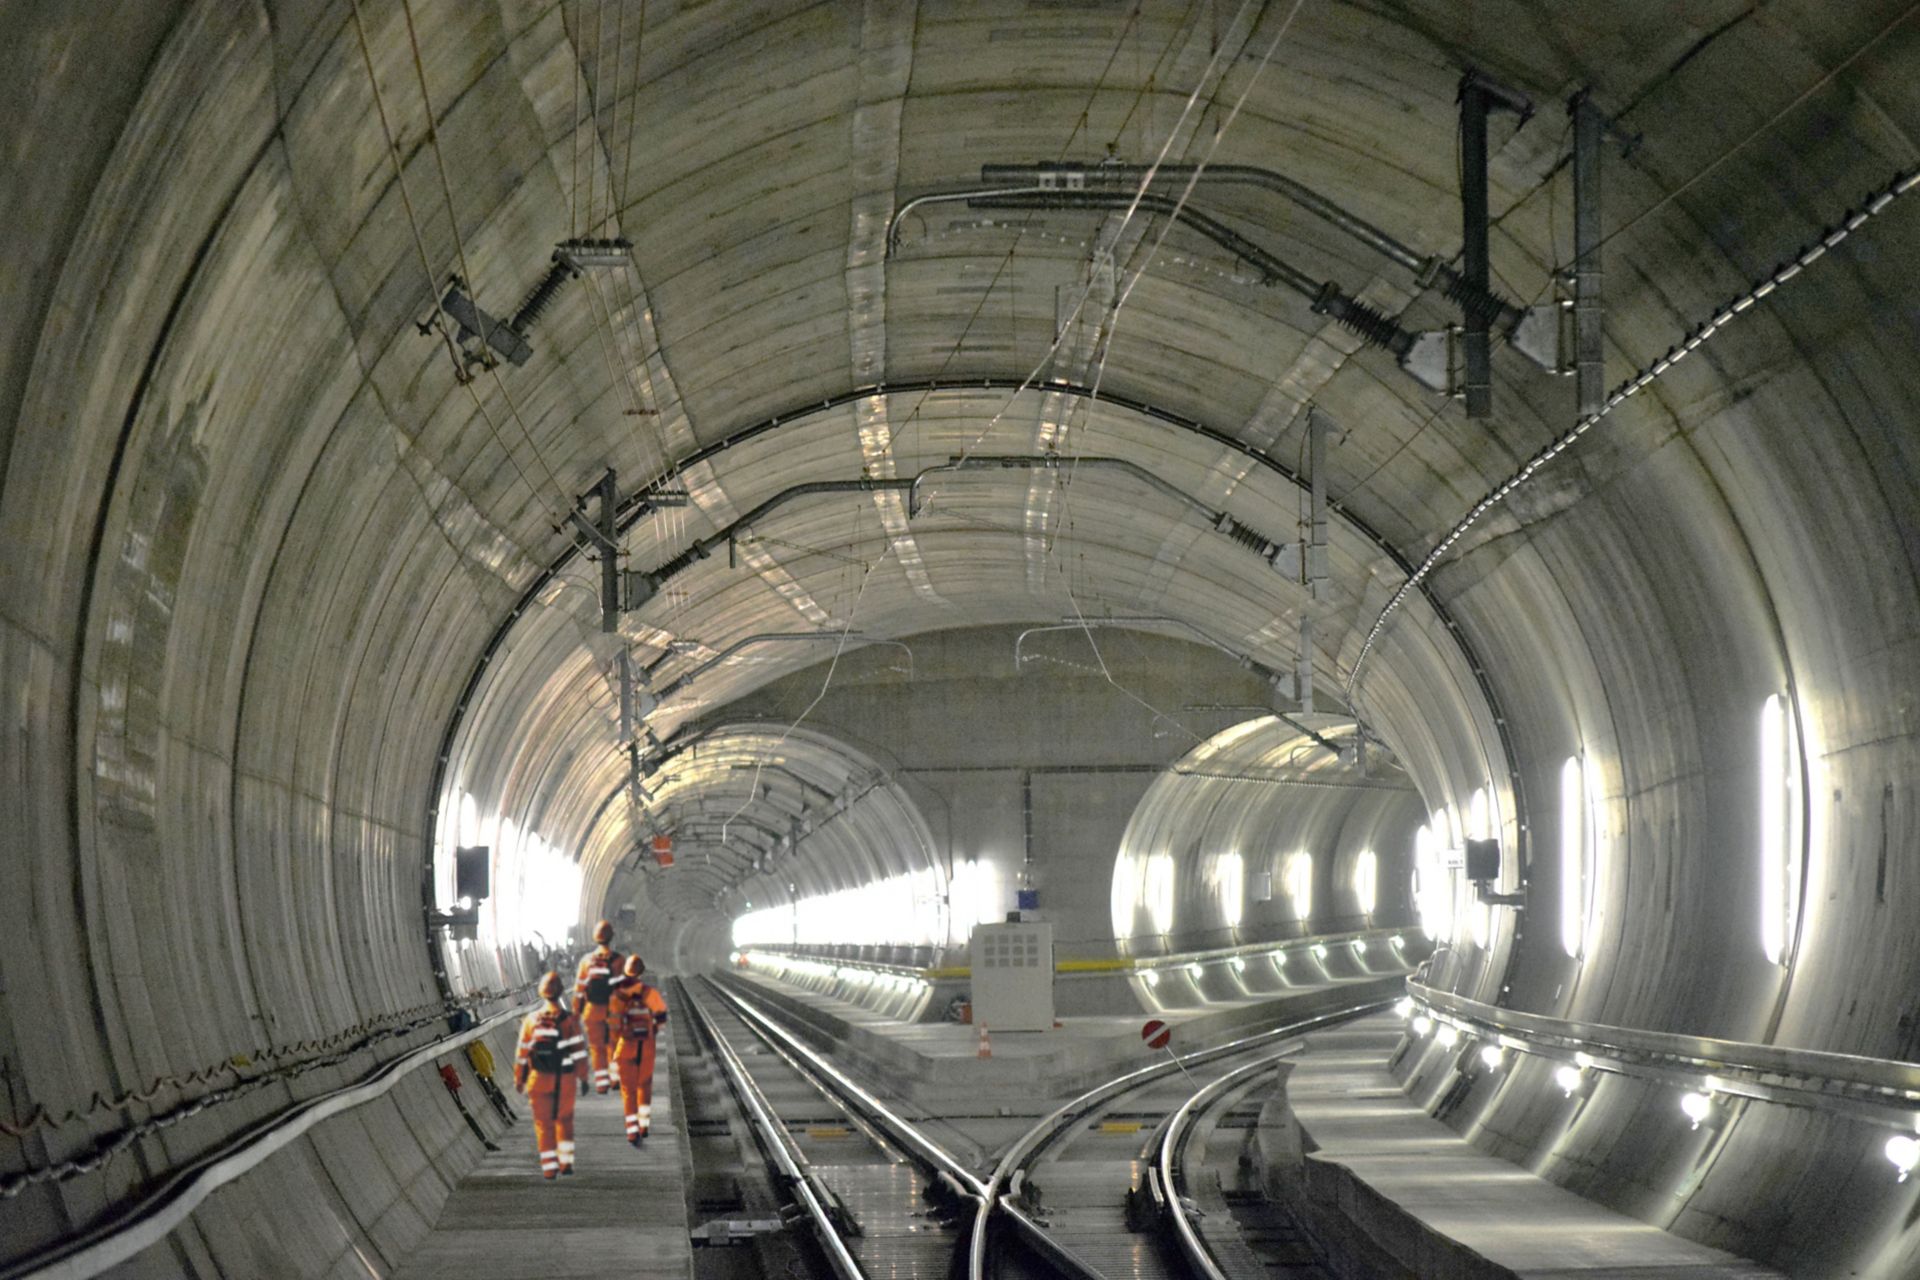 Construction workers walking inside Gotthard Tunnel in Switzerland